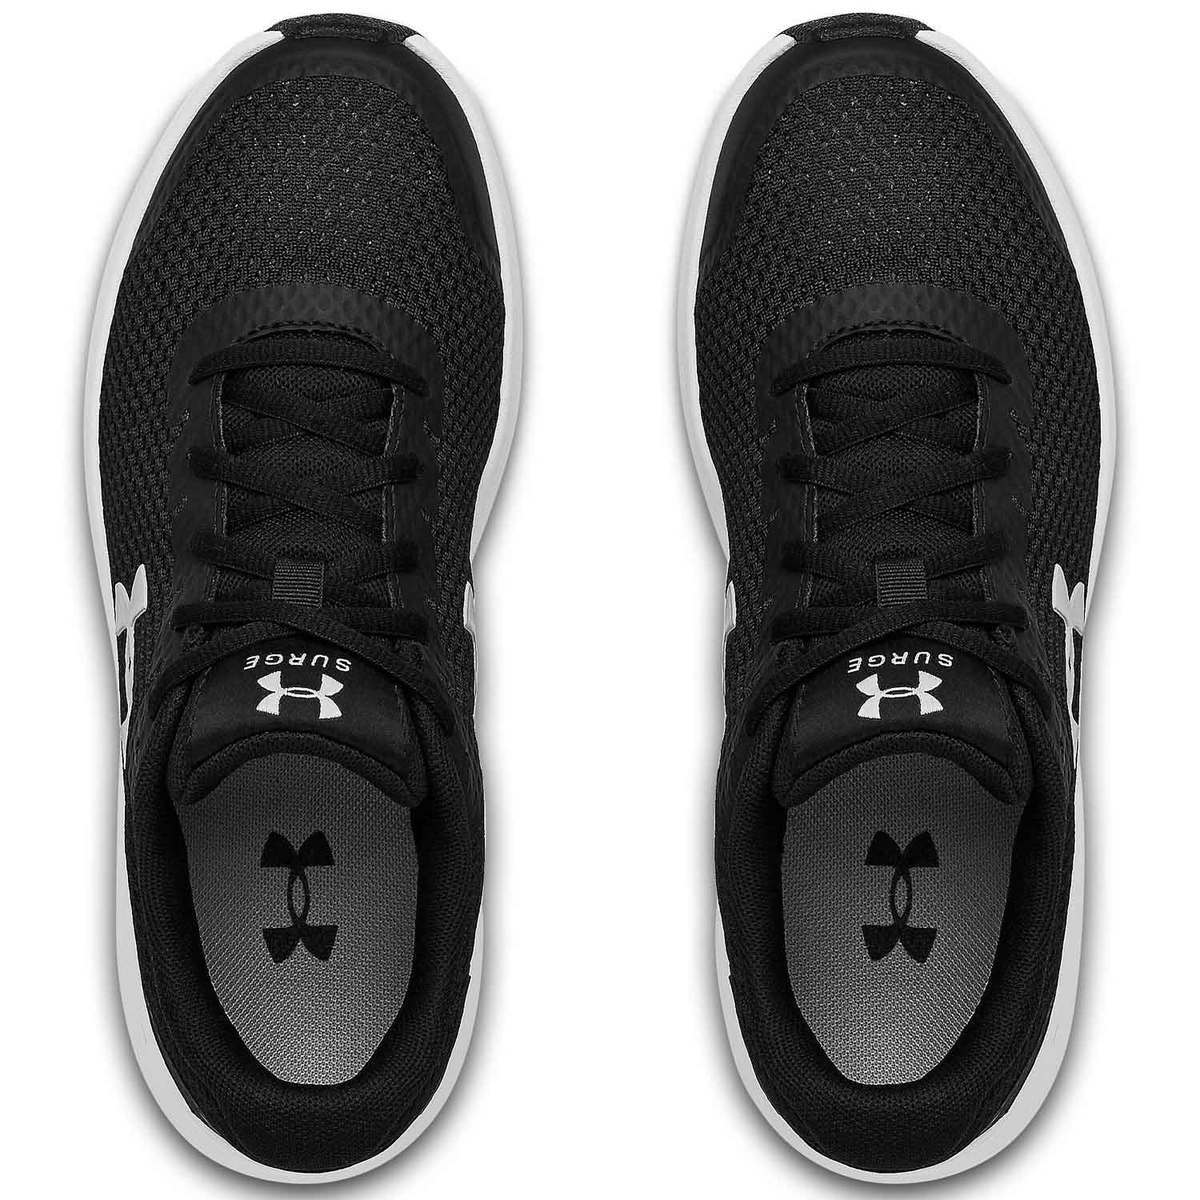 Under Armour Women's Surge 2 Running Shoes - Black - Size 8 - Black 8 ...